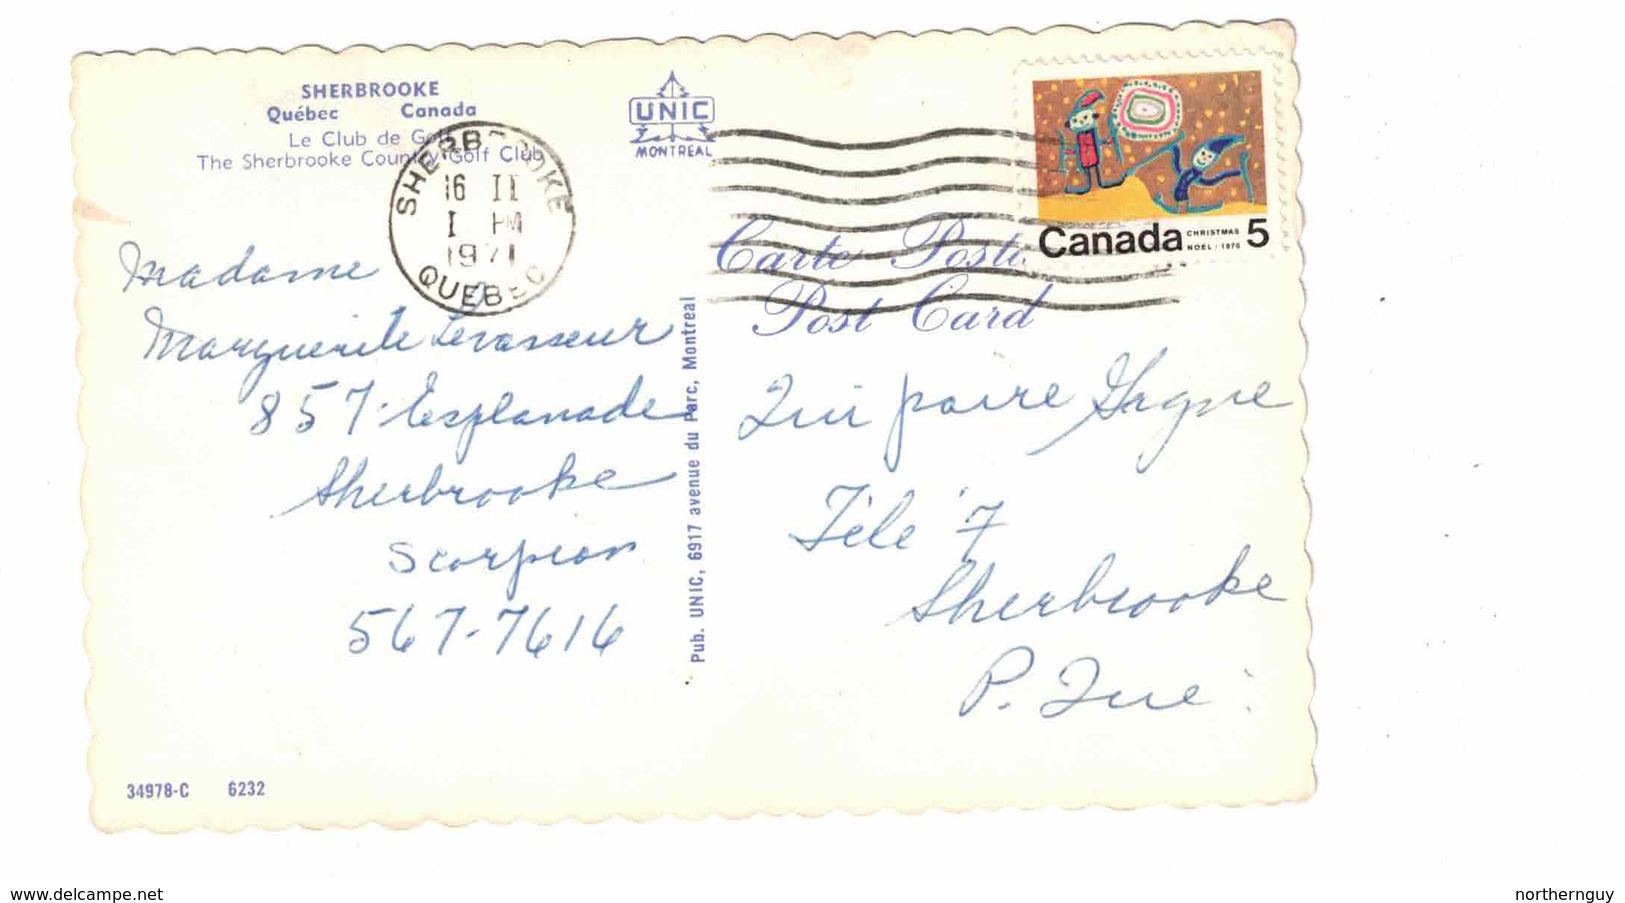 SHERBROOKE, Quebec, Canada, Sherbrooke Country Golf Club, 1971 Chrome Postcard - Sherbrooke